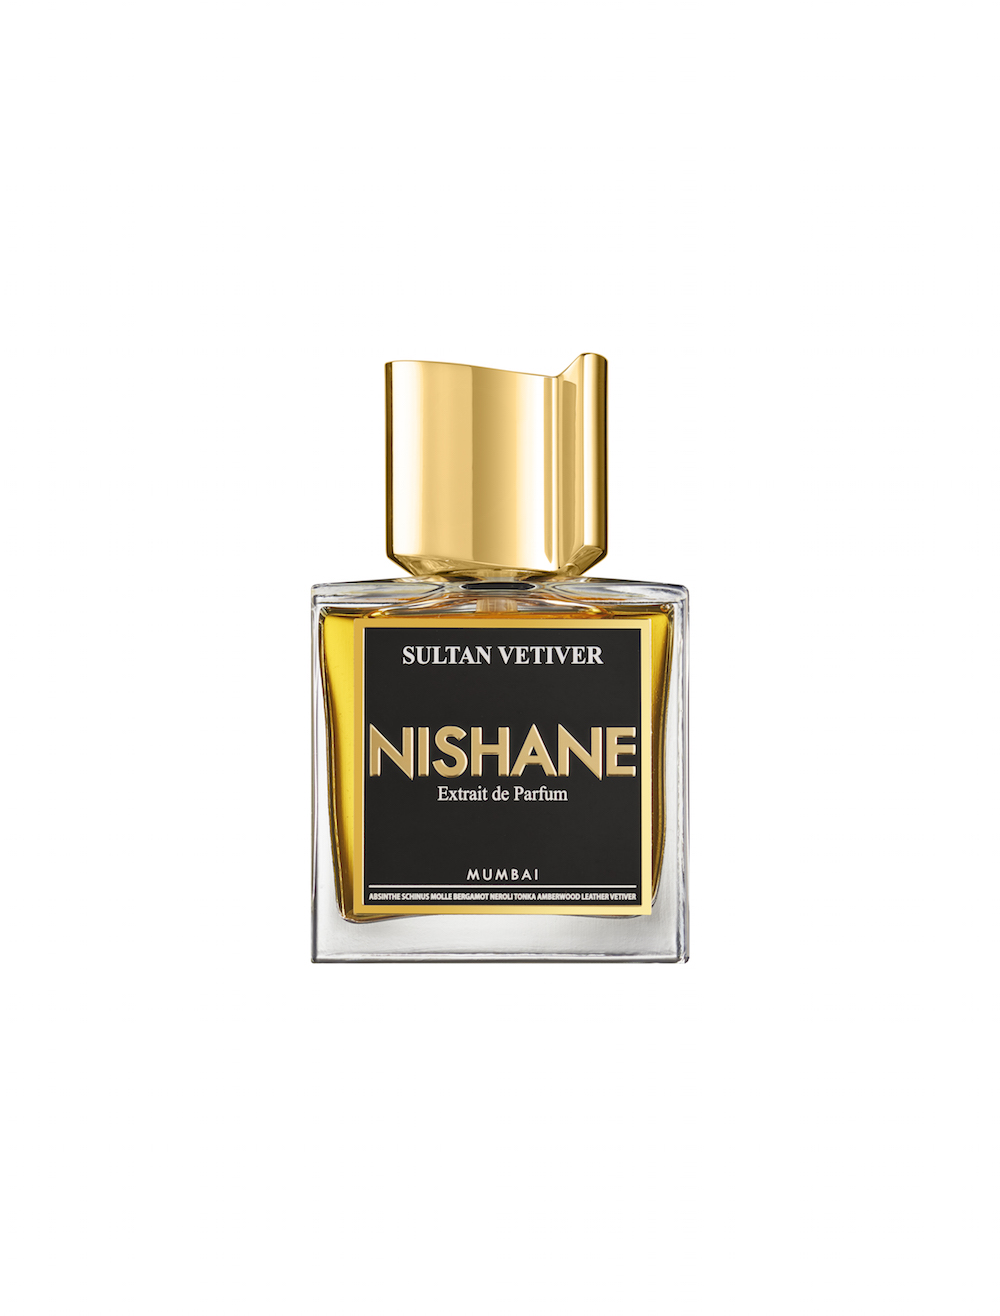 Nishane - Sultan Vetiver - Extrait de Parfum 50 ml